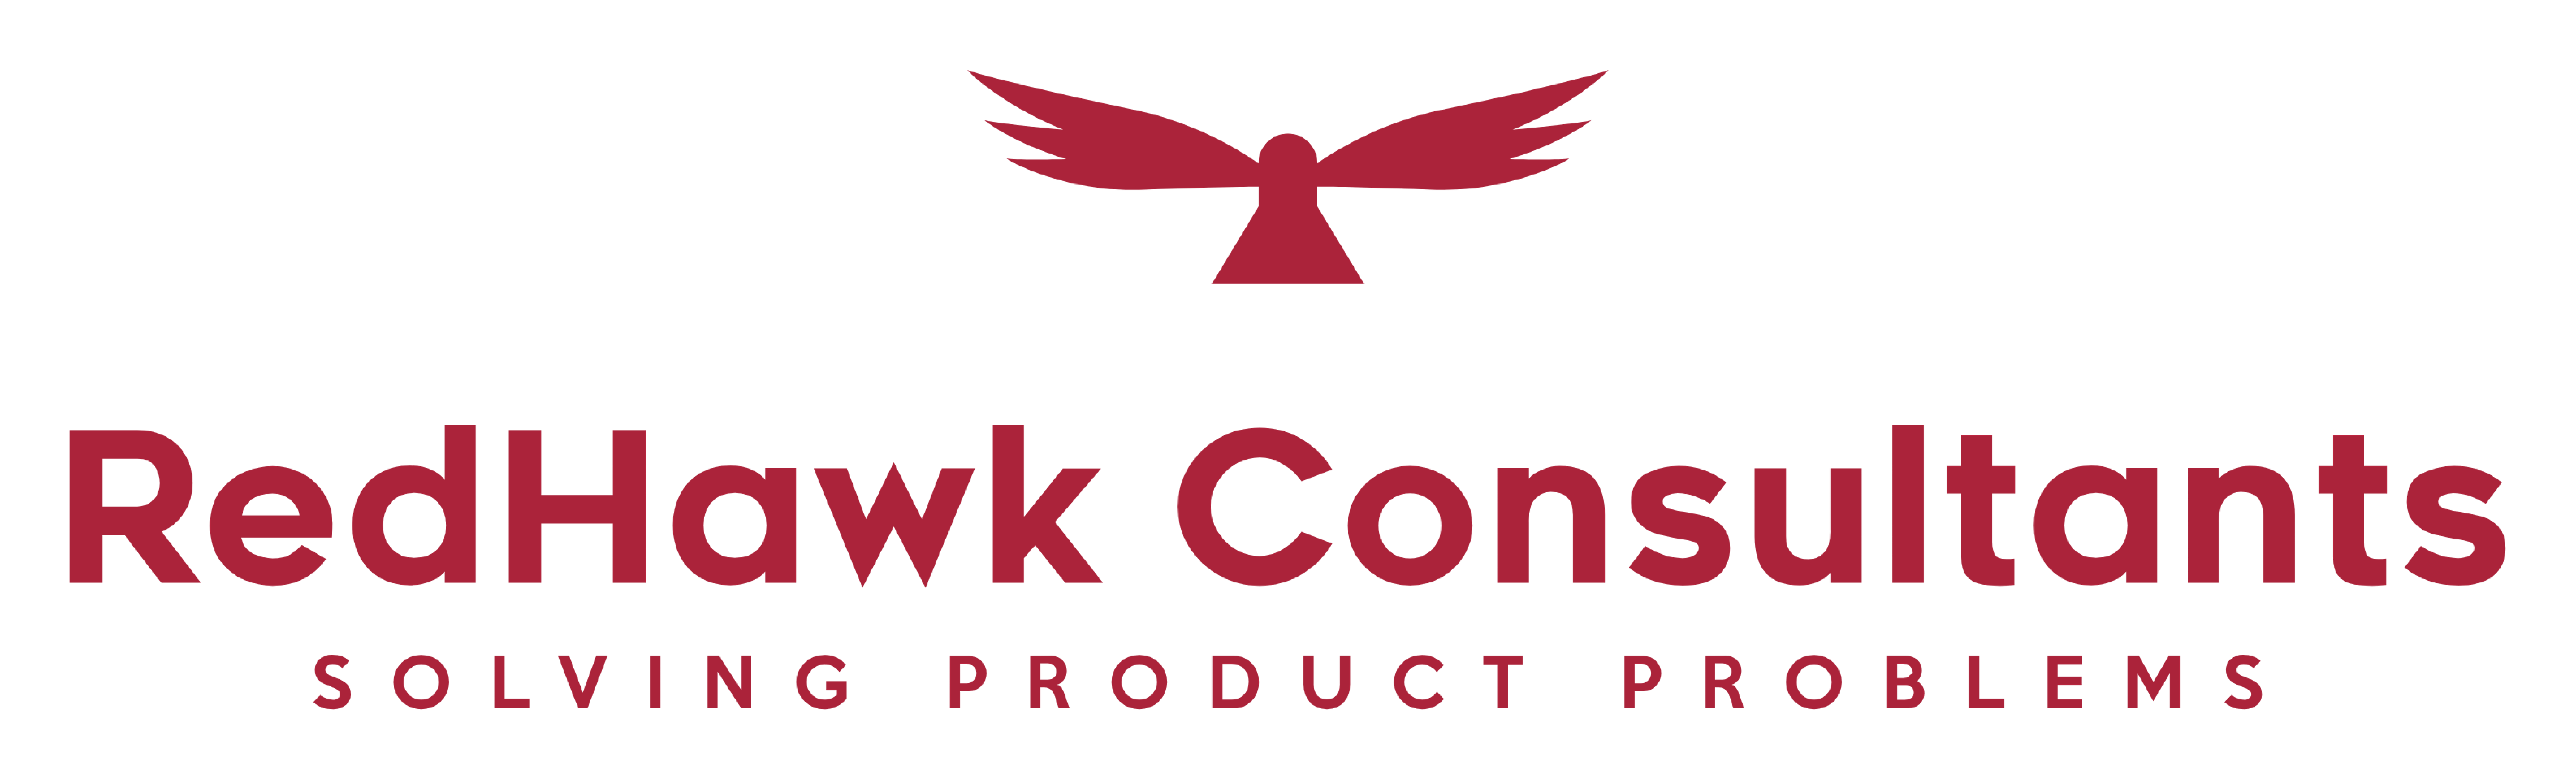 RedHawk Consultants logo